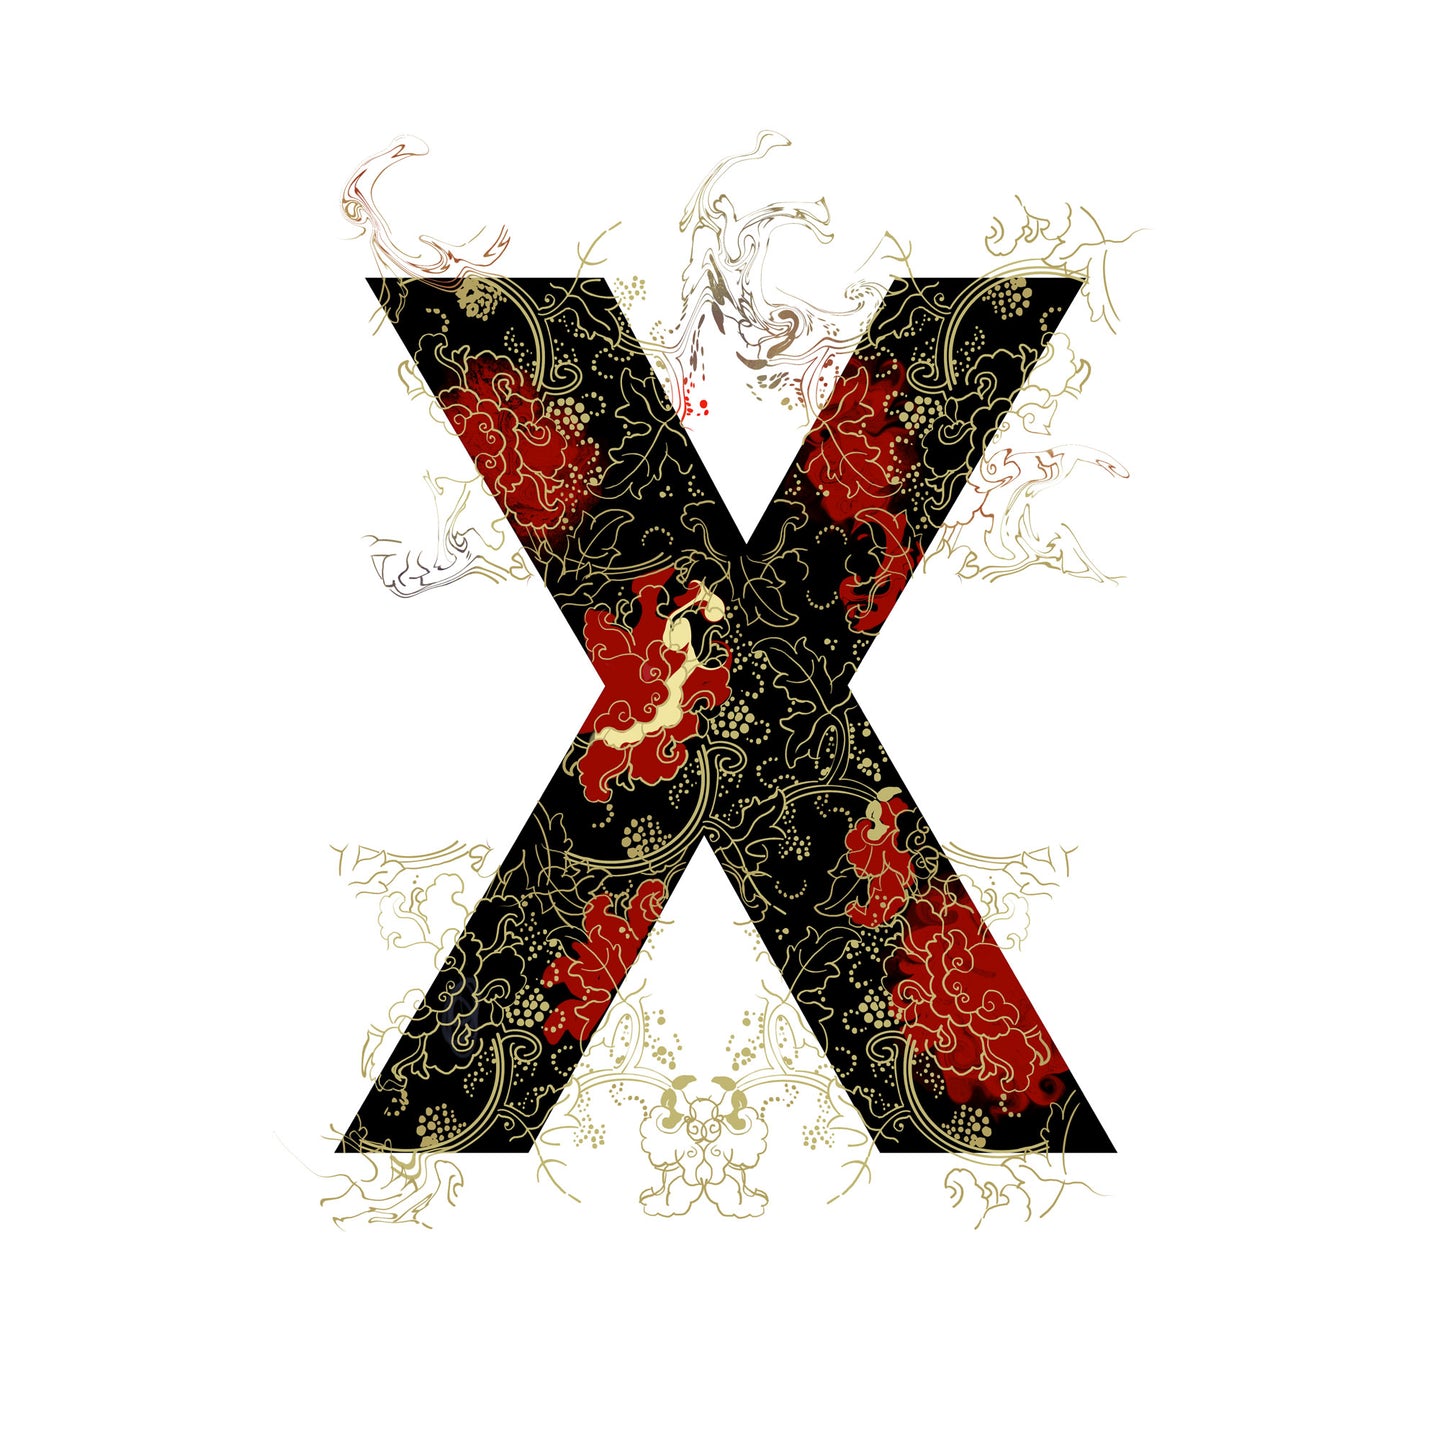 'WILD X' From the Wild Alphabet.